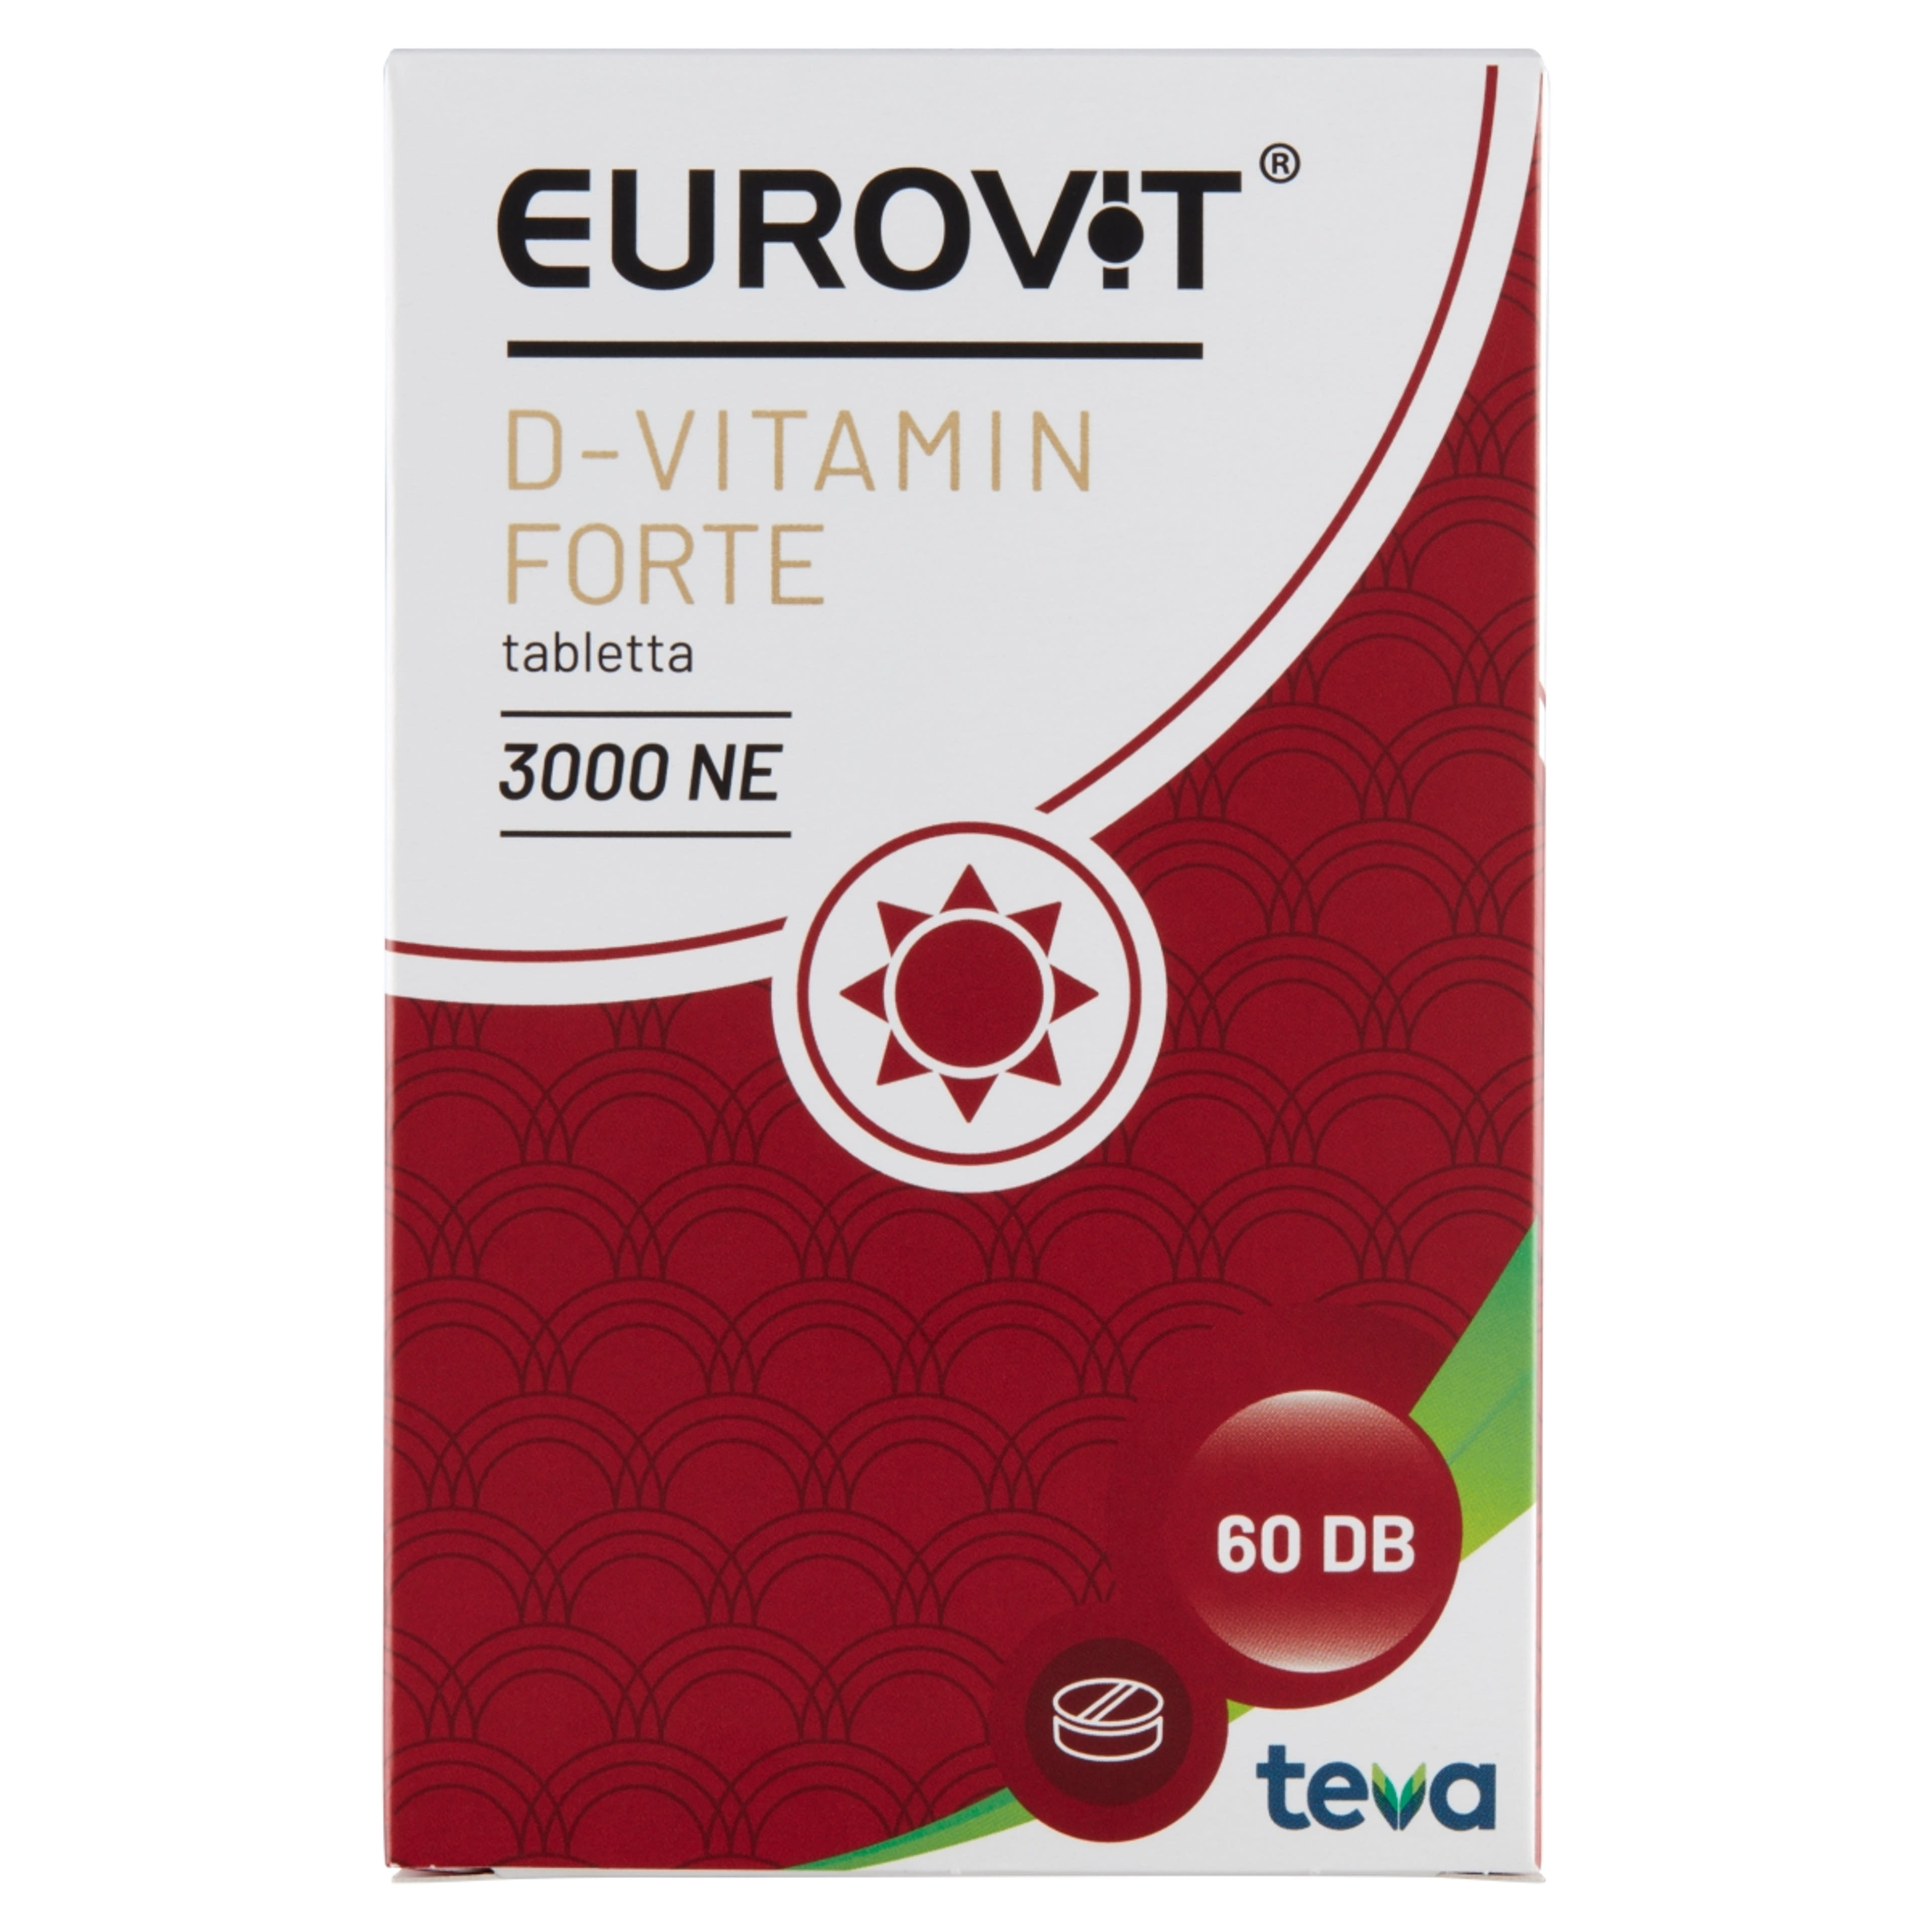 Eurovit D-Vitamin Forte 3000 Ne tabletta - 60 db-1